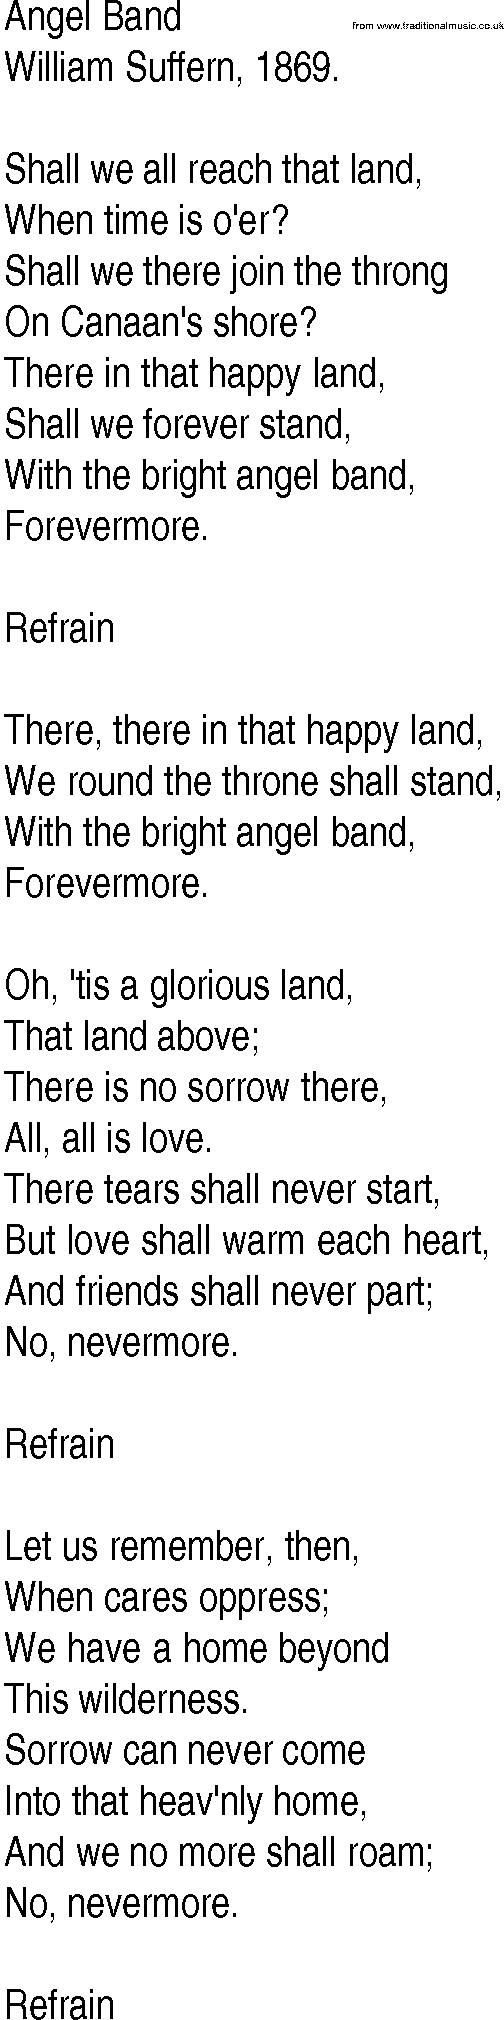 Hymn and Gospel Song: Angel Band by William Suffern lyrics